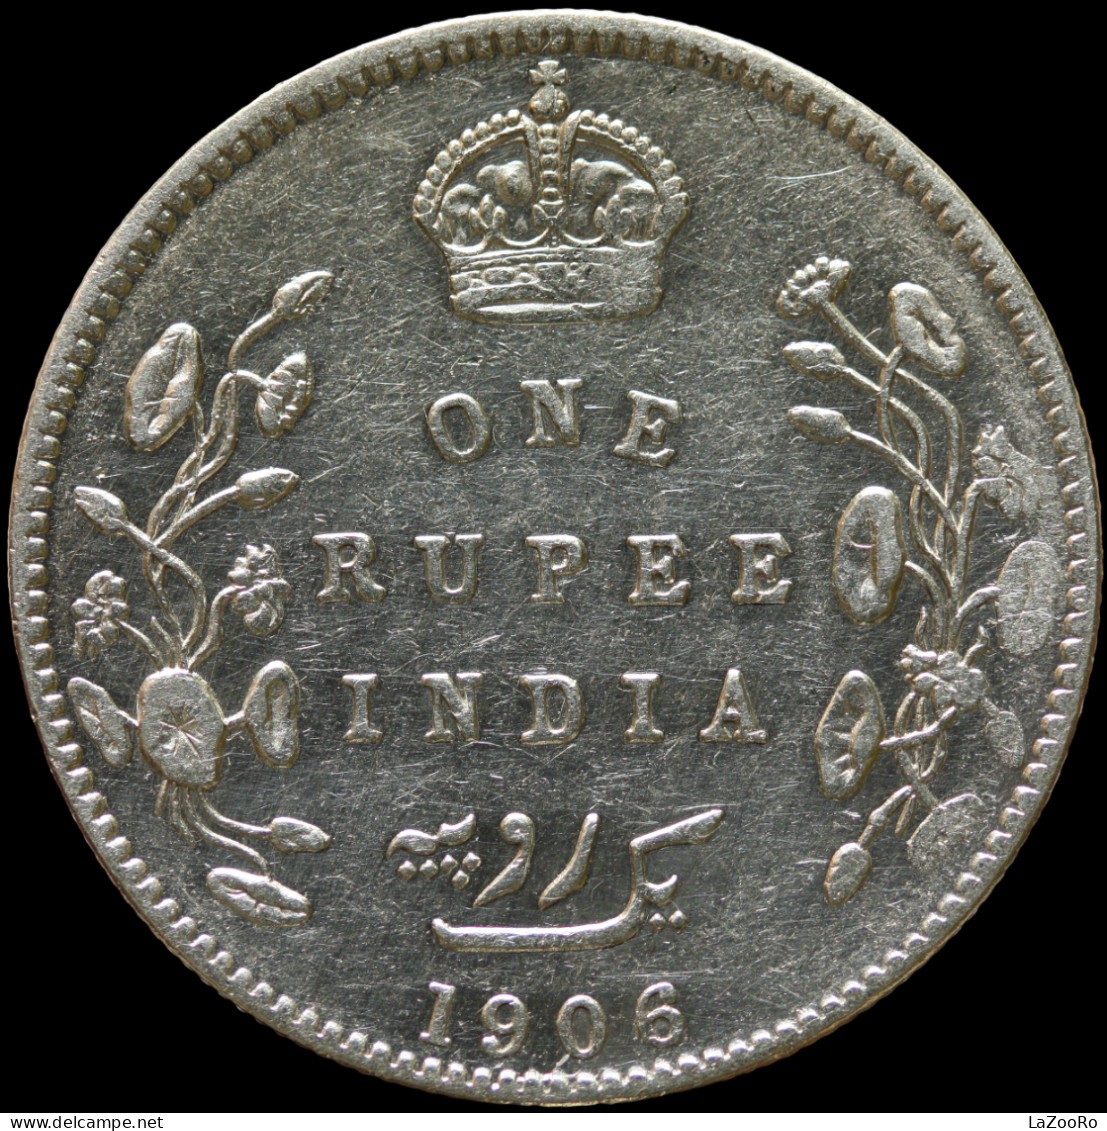 LaZooRo: British India 1 Rupee 1906 XF - Silver - Colonies